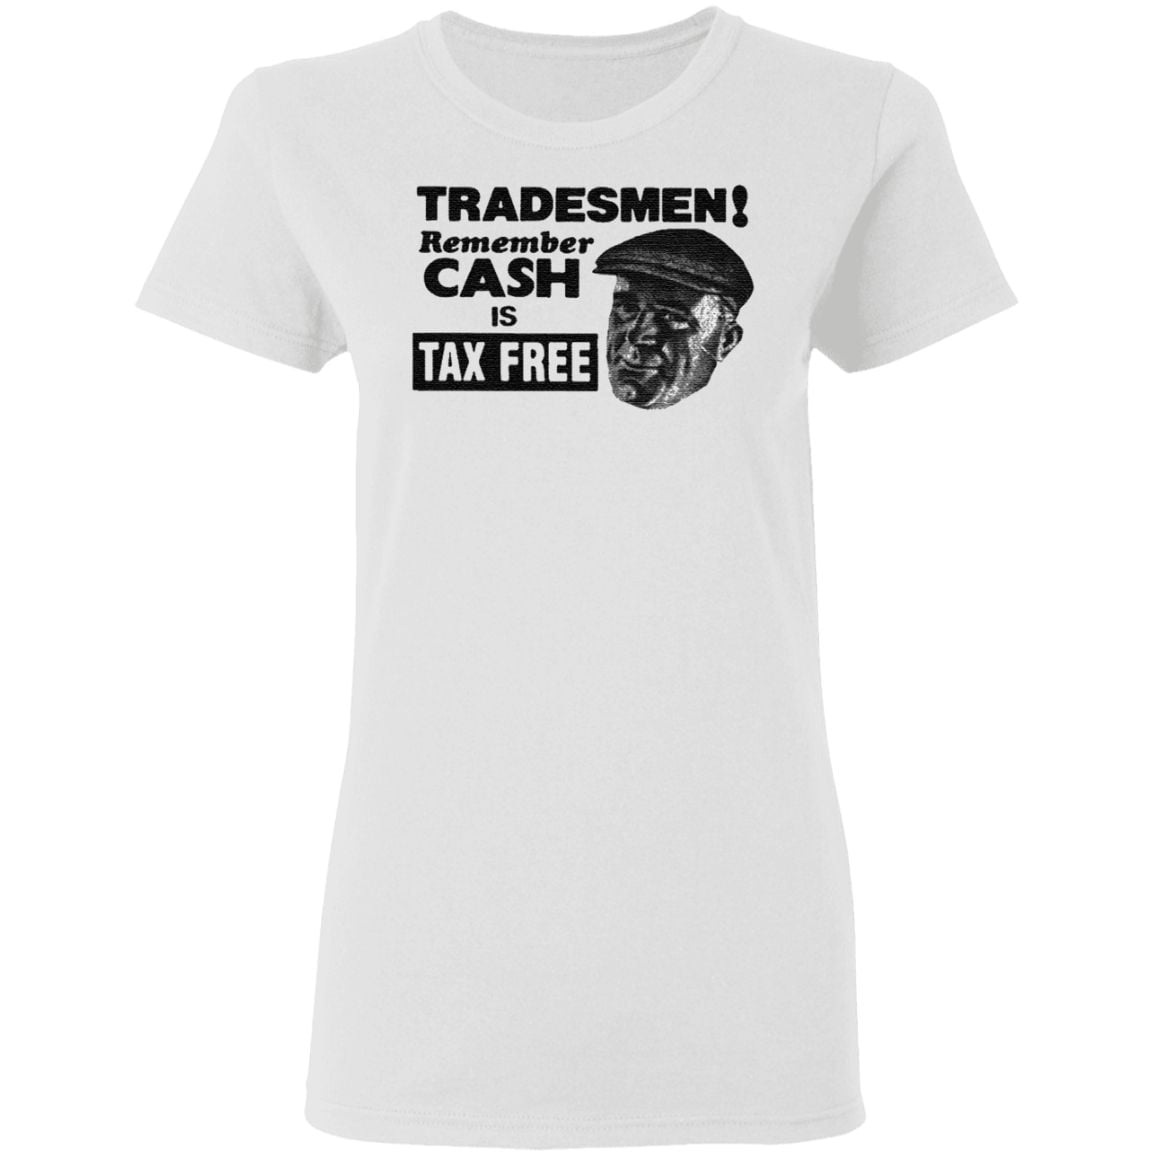 Tradesmen remember cash is tax free t shirt